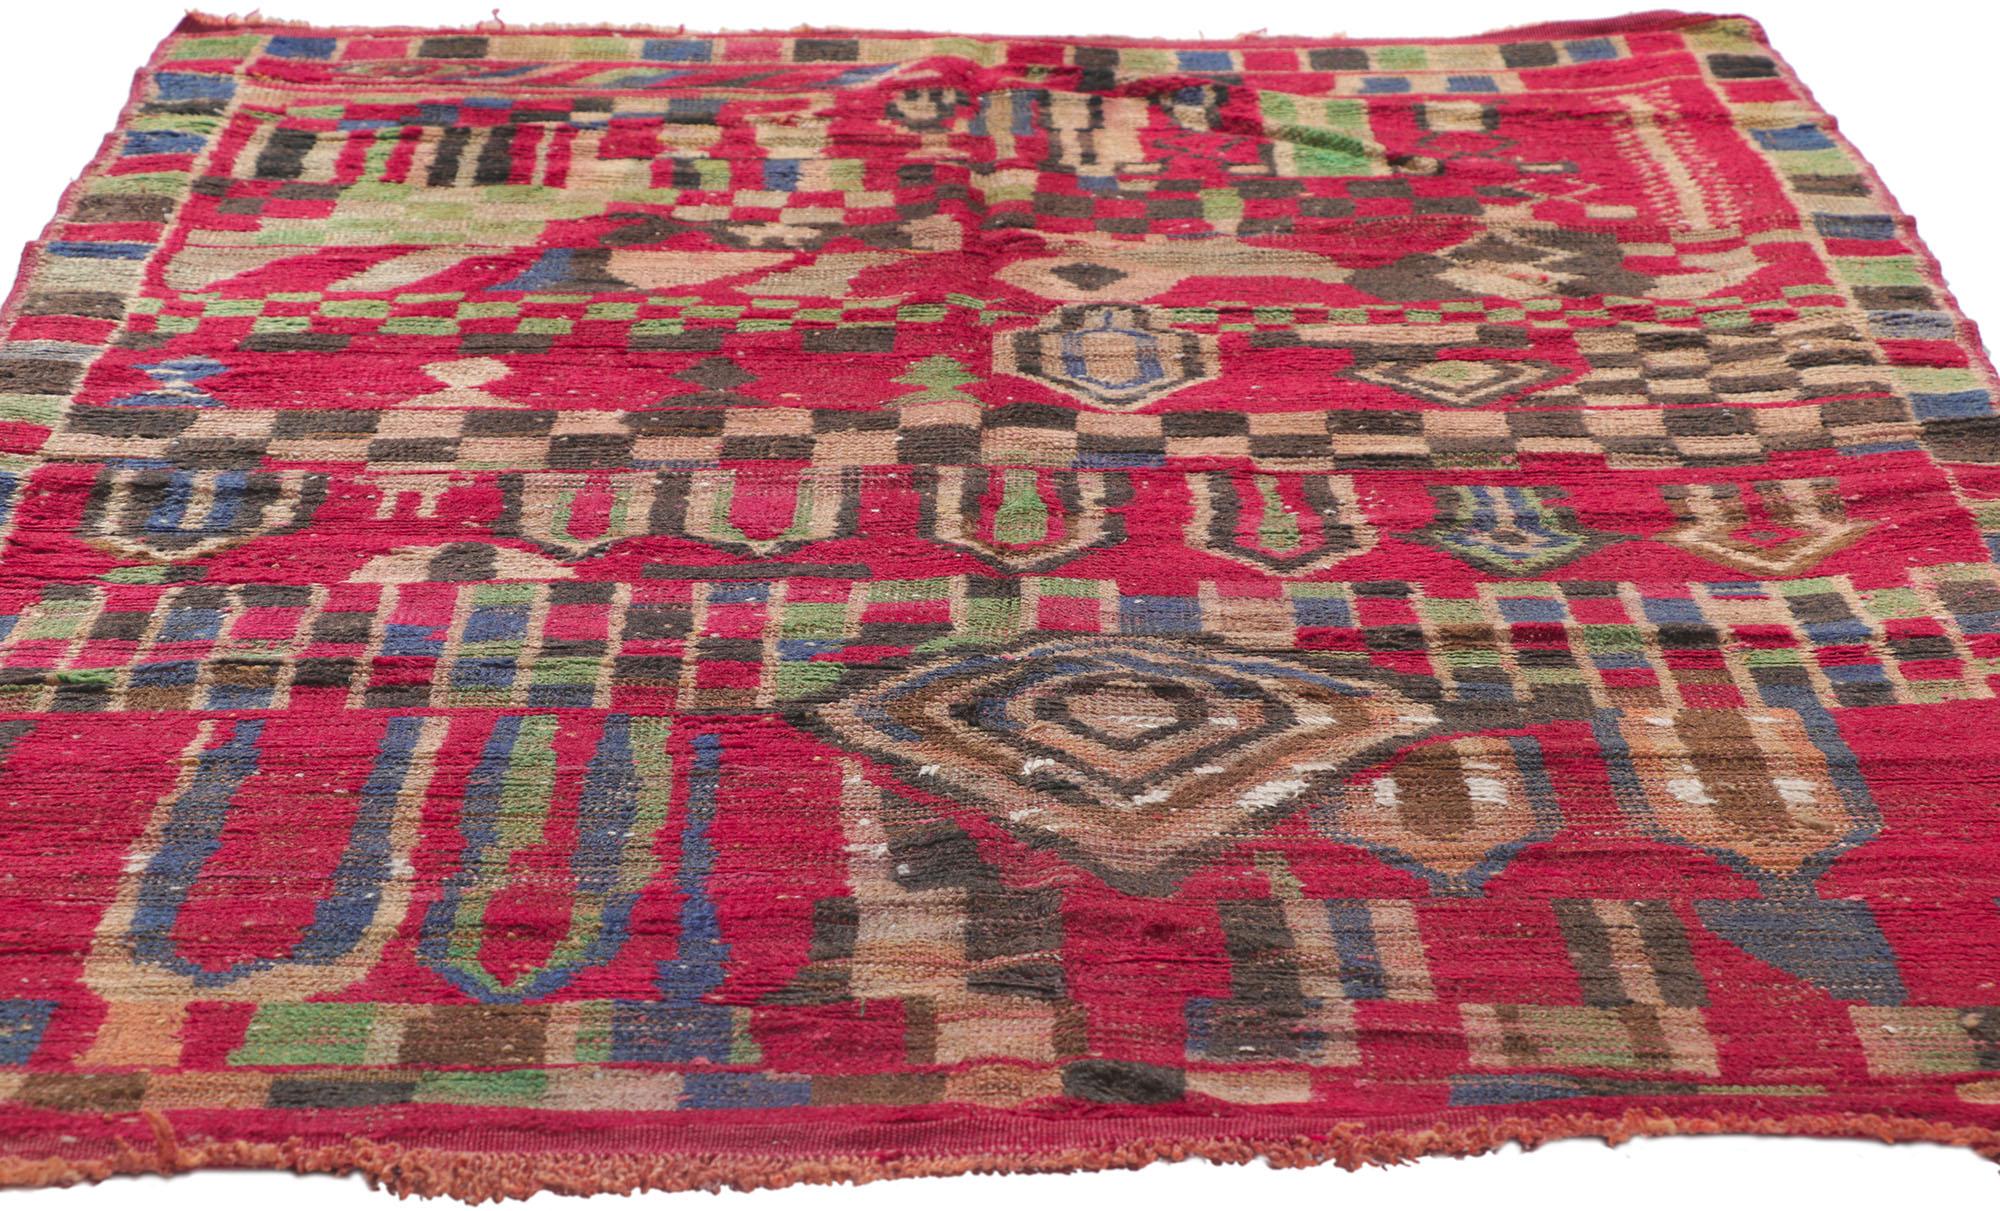 Tribal Vintage Berber Moroccan Rug with Color Block Design For Sale